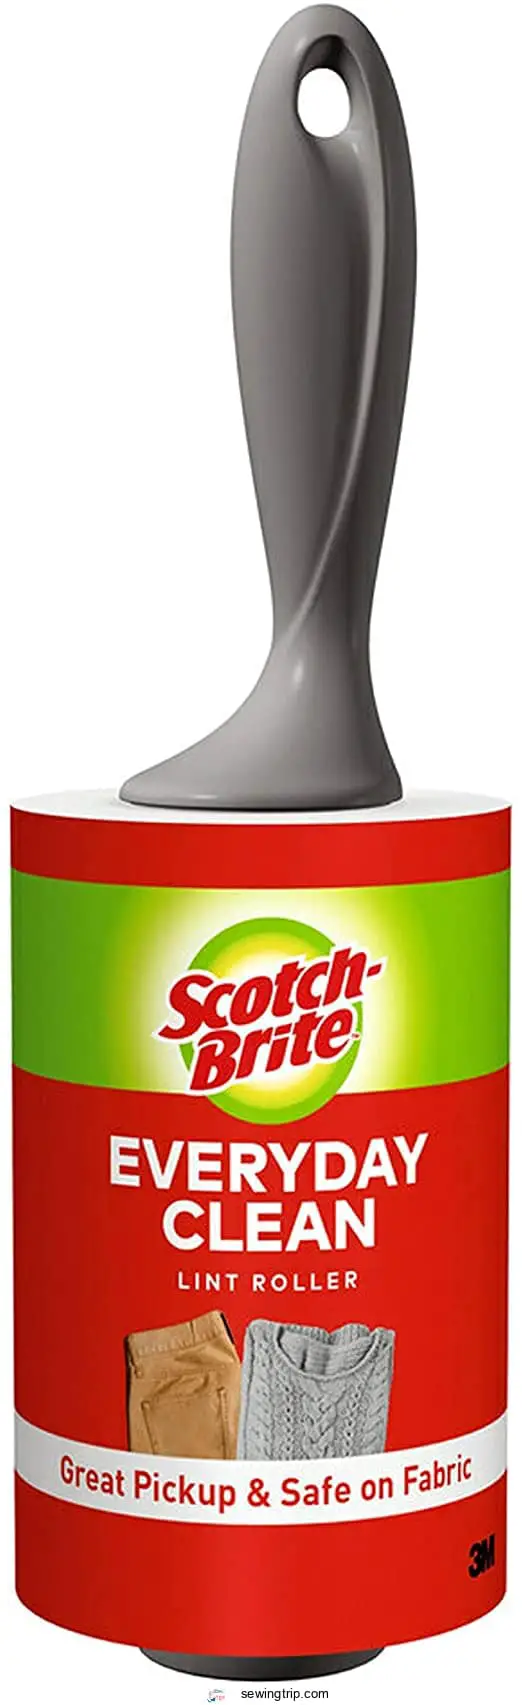 Scotch-Brite Lint Roller, Works Great